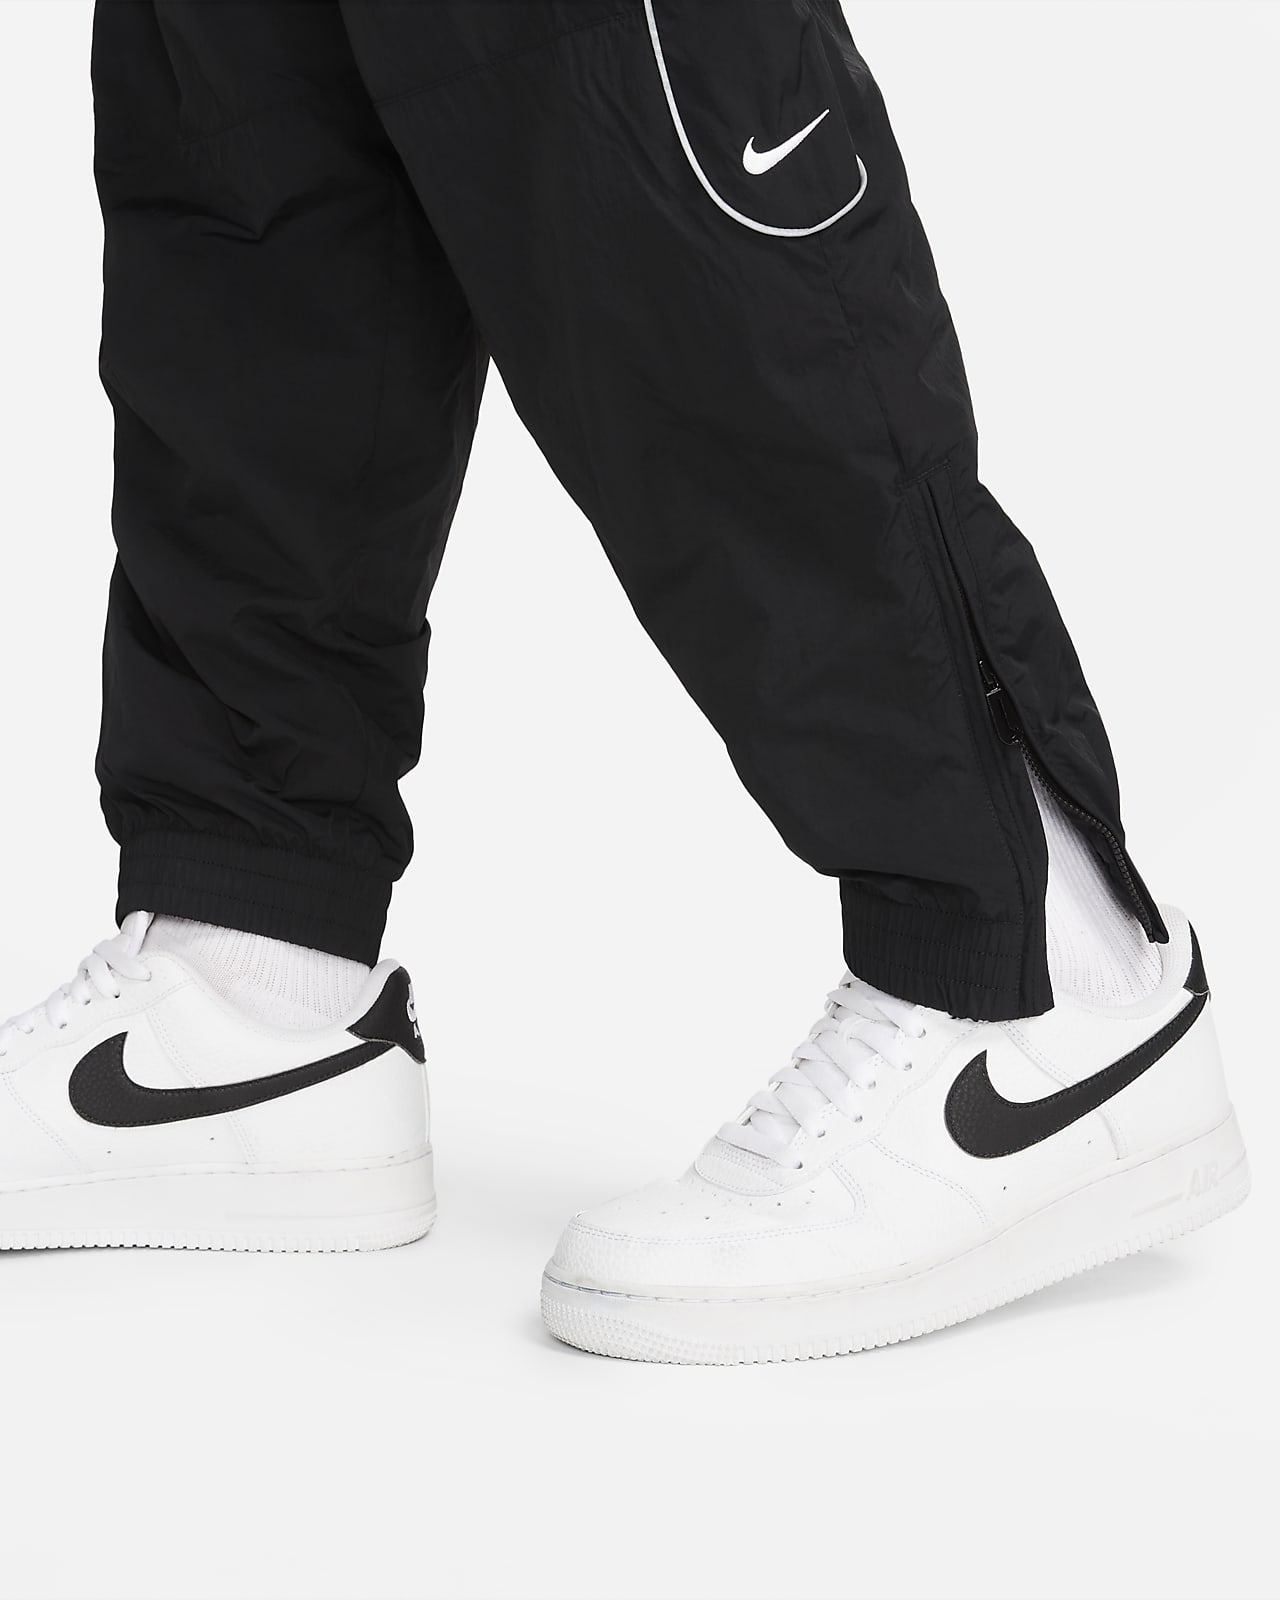 Men's Size M Nike Solo Swoosh Fleece Pants Sweatpants Phantom